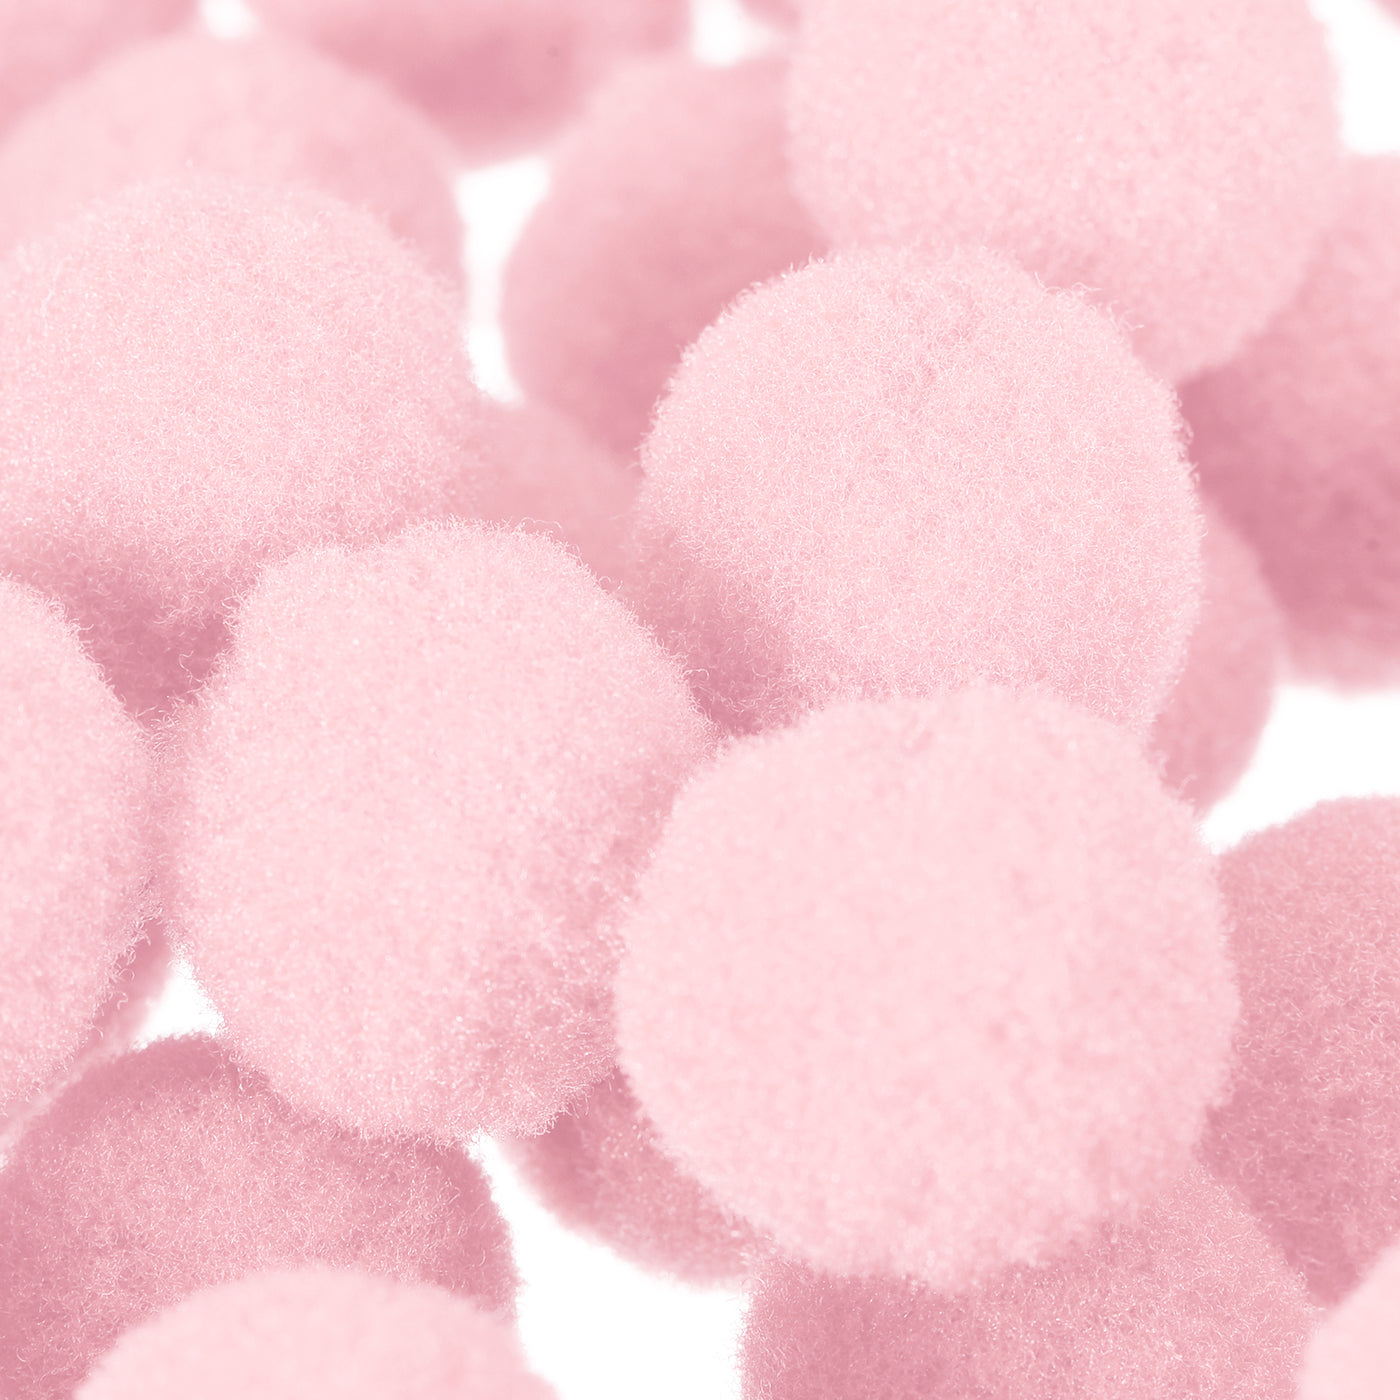 Harfington Pom Felt Balls Fabric 1.5cm 15mm Light Pink for Craft Project DIY 200 Pcs